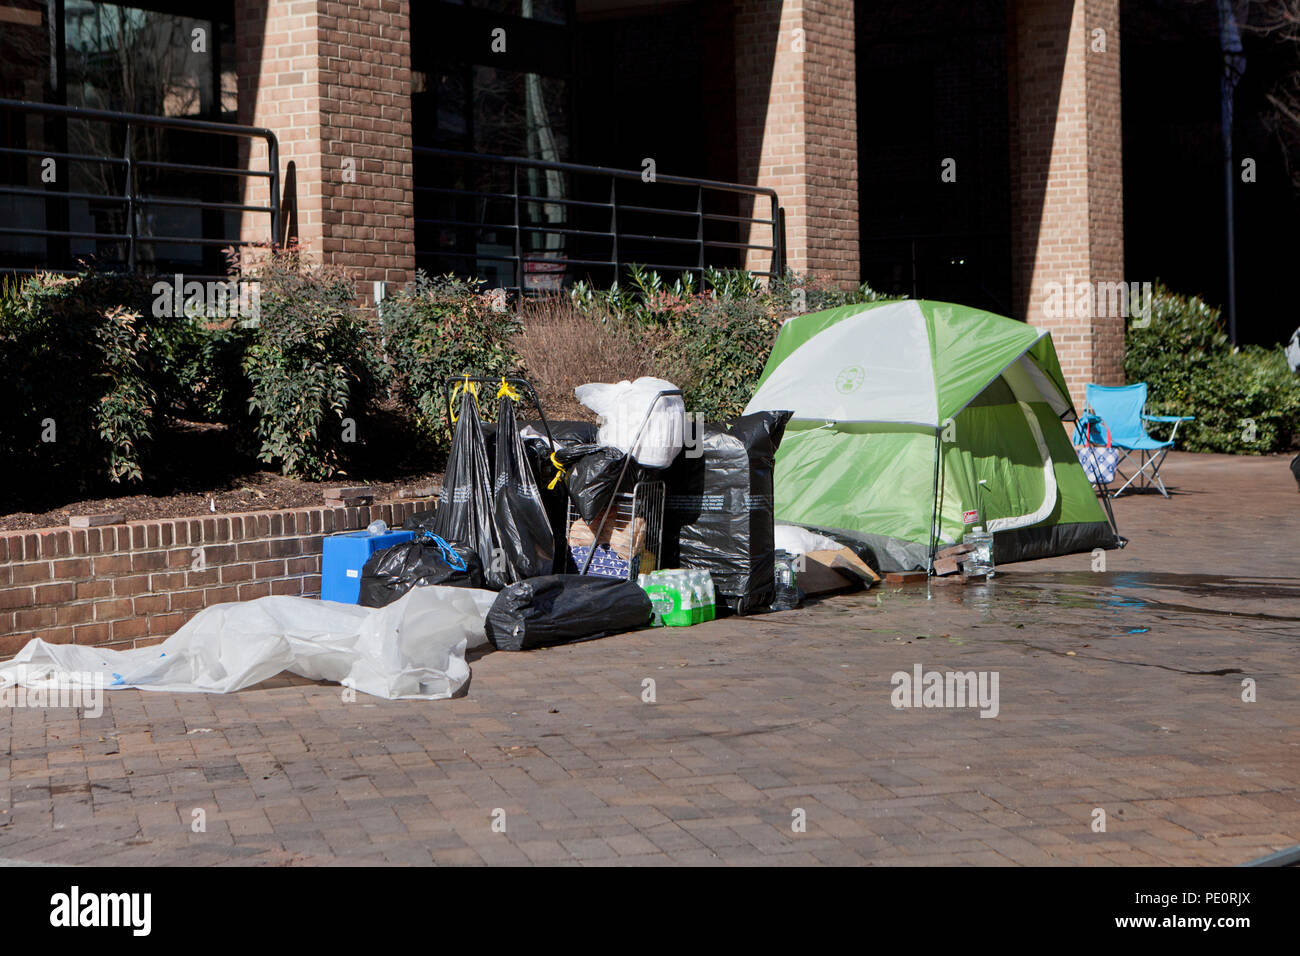 Homeless tents (sidewalk tent) in urban environment - Washington, DC USA Stock Photo